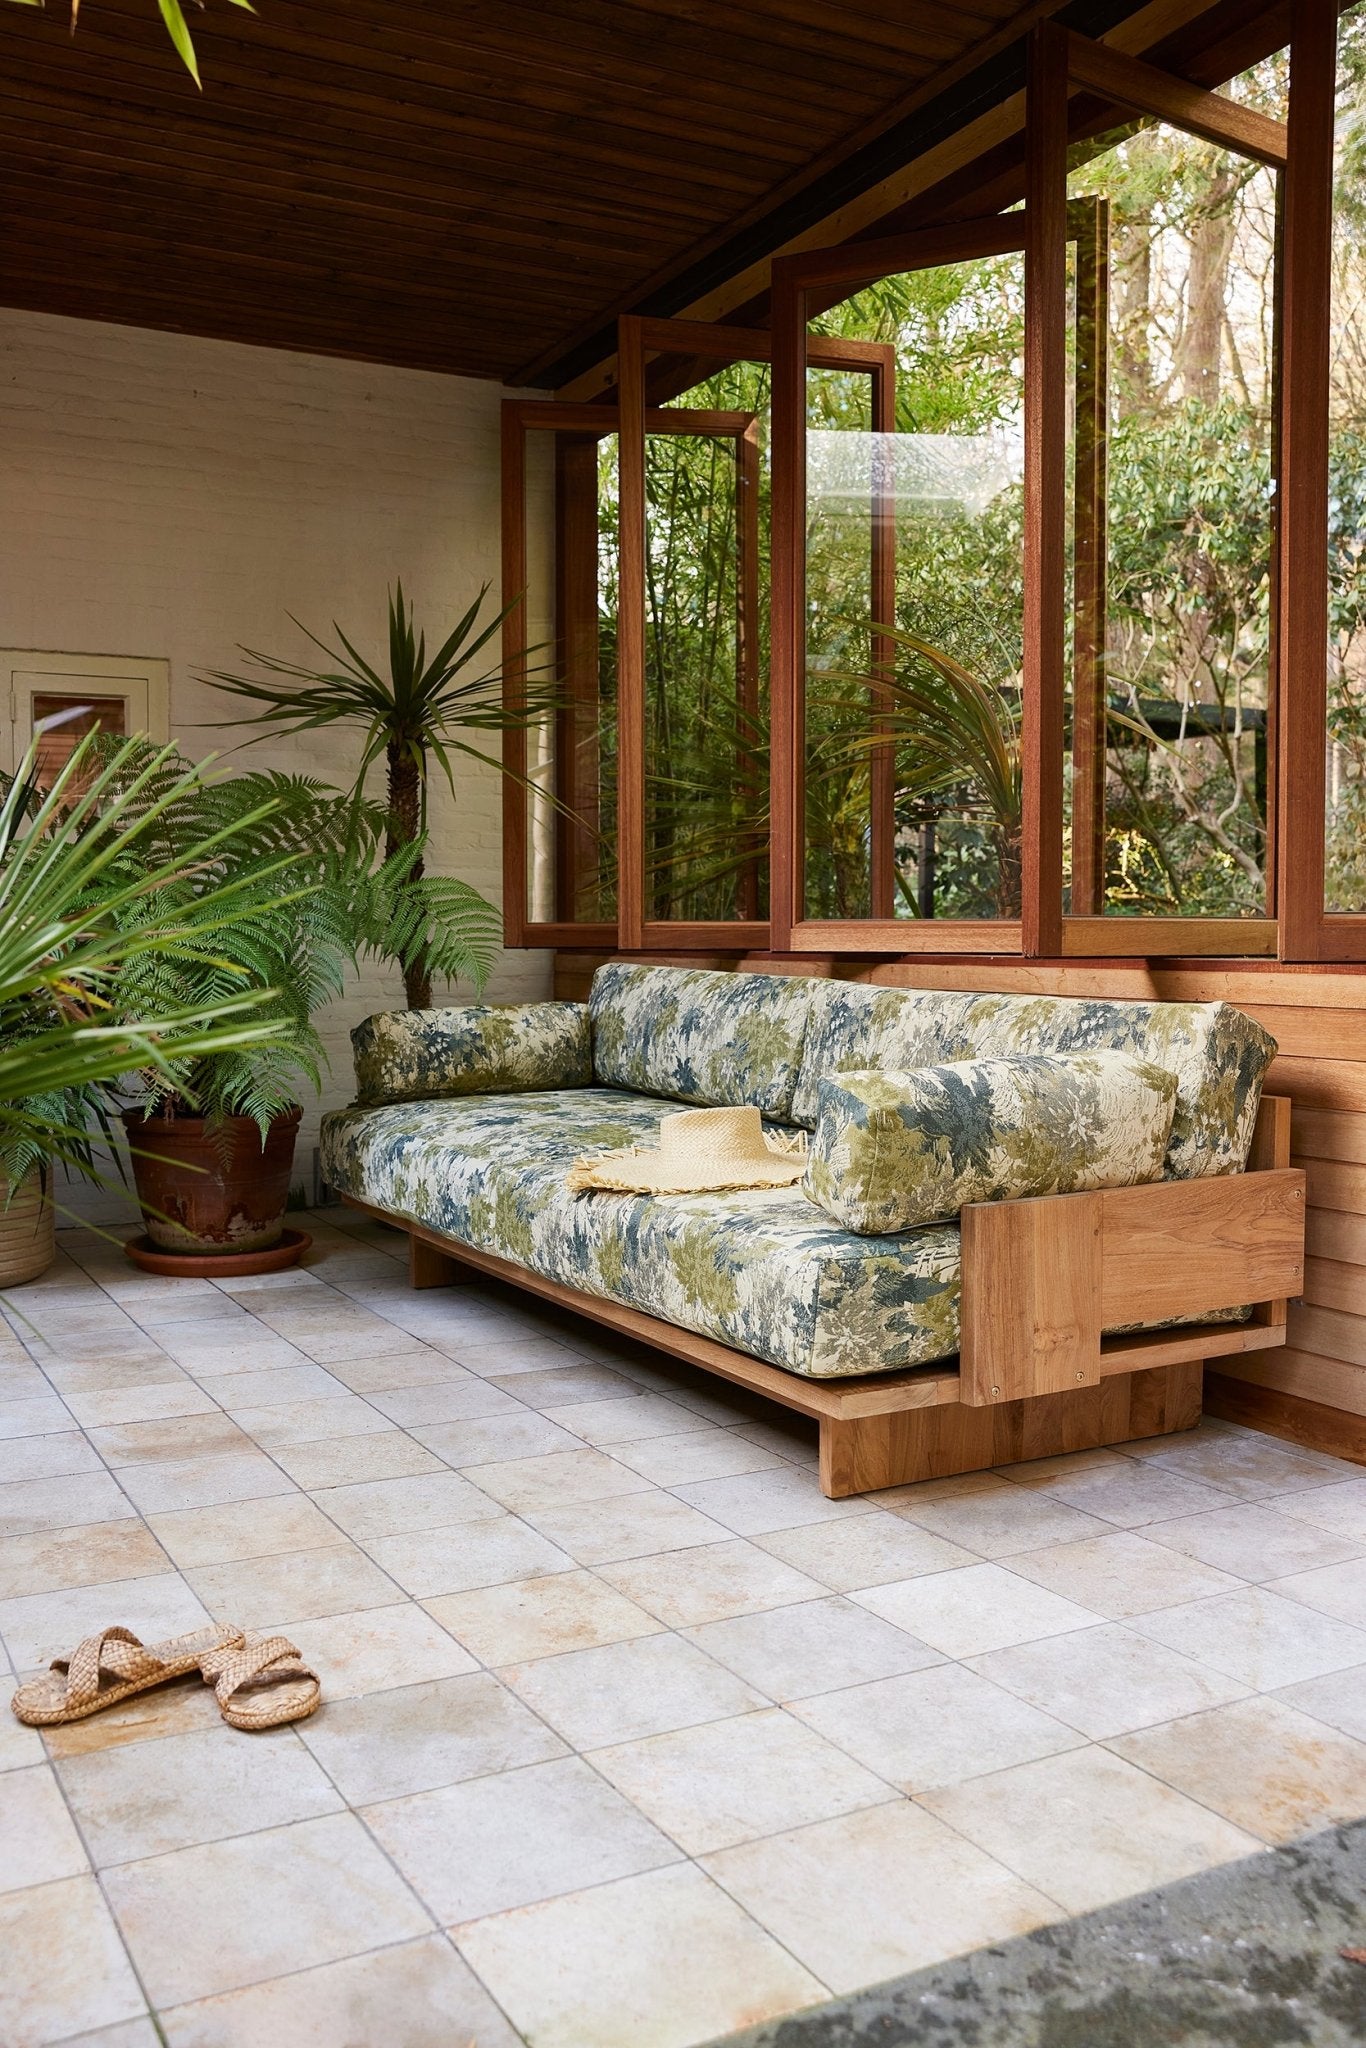 Outdoor sofa - teak botanical - Urban Nest